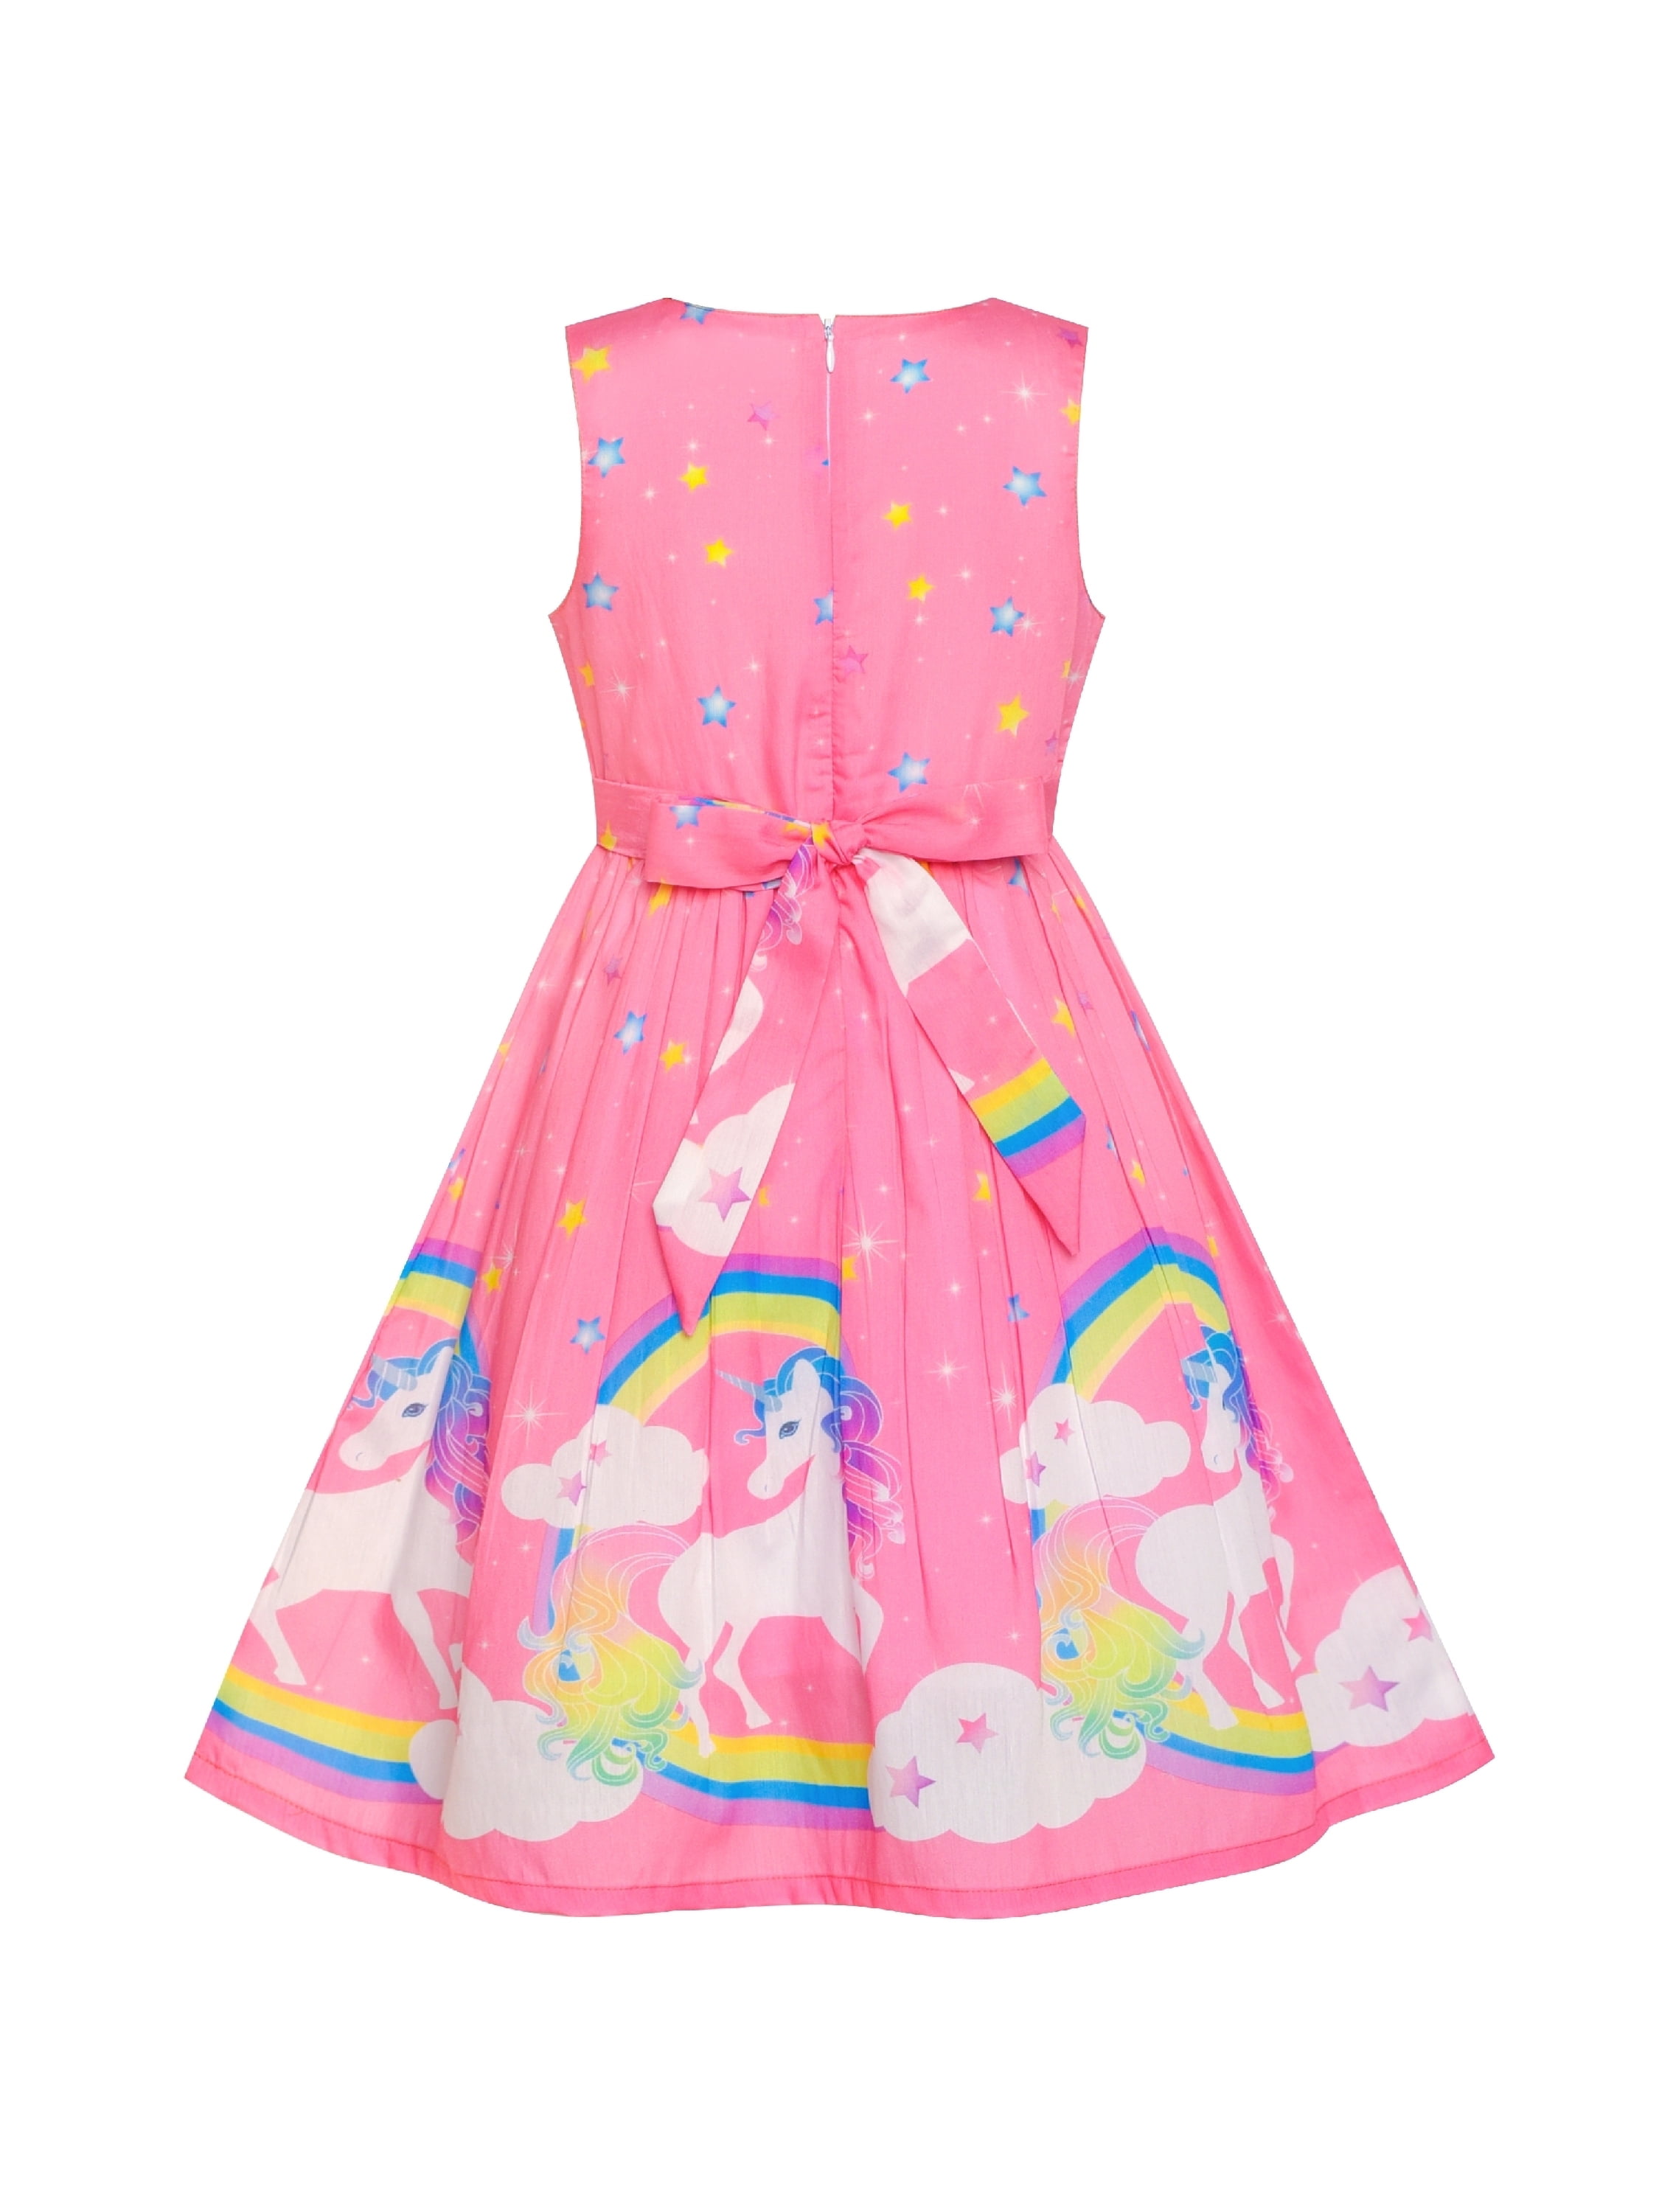 Rainbow LV Shorts – Sparkling Unicorn Children's Boutique